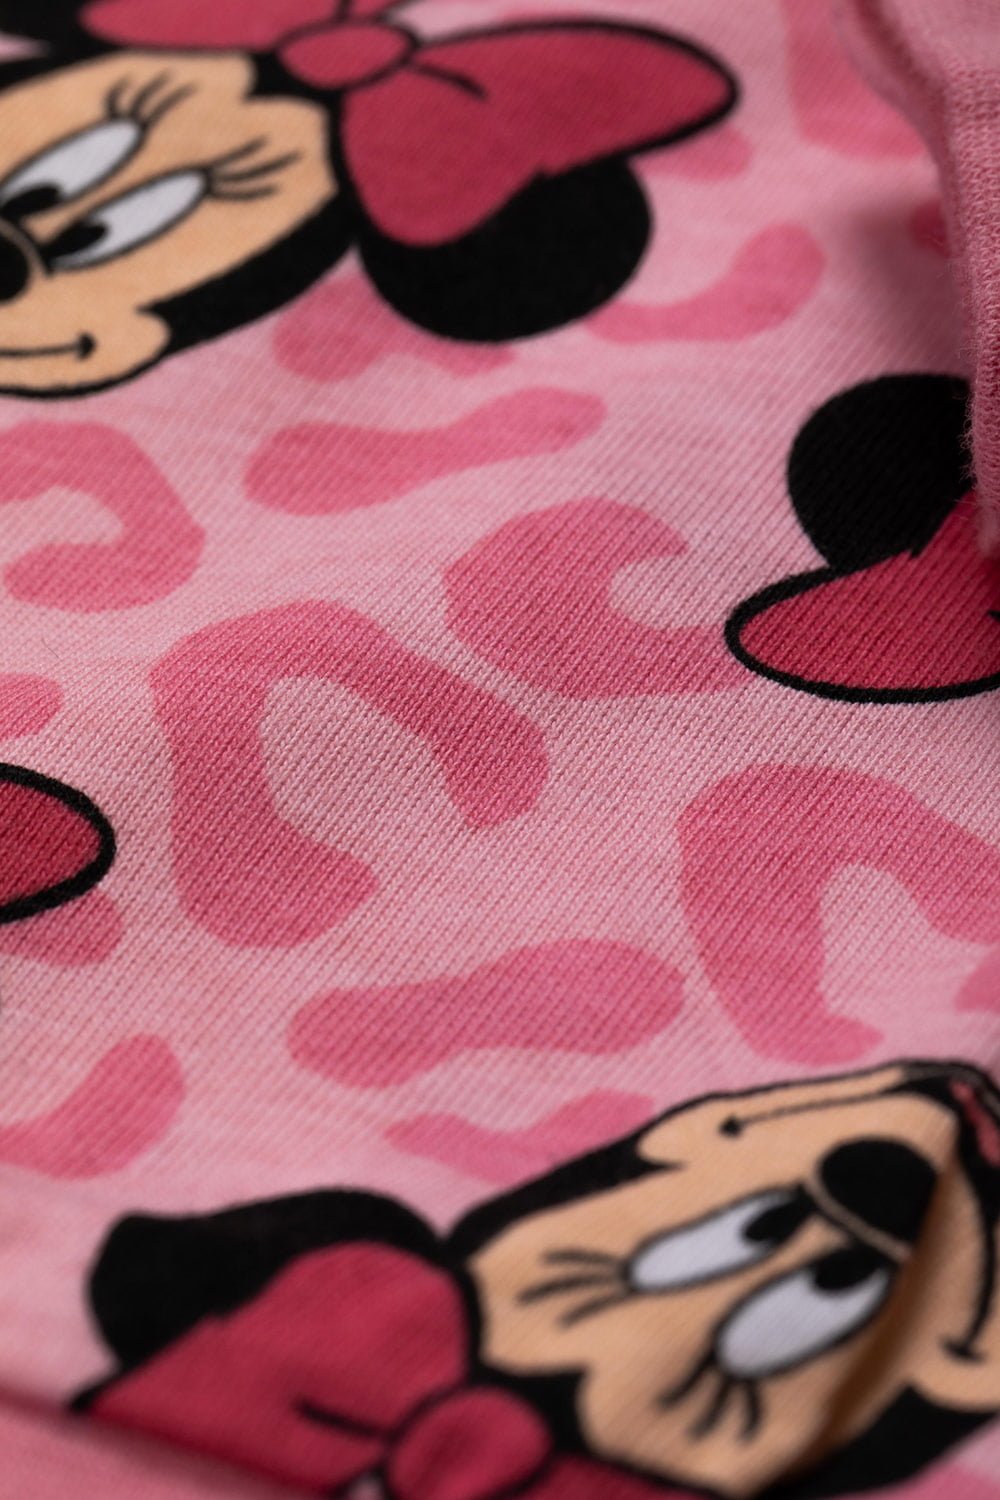 Disney Minnie Mouse Girls Organic Cotton Pyjamas - Brand Threads